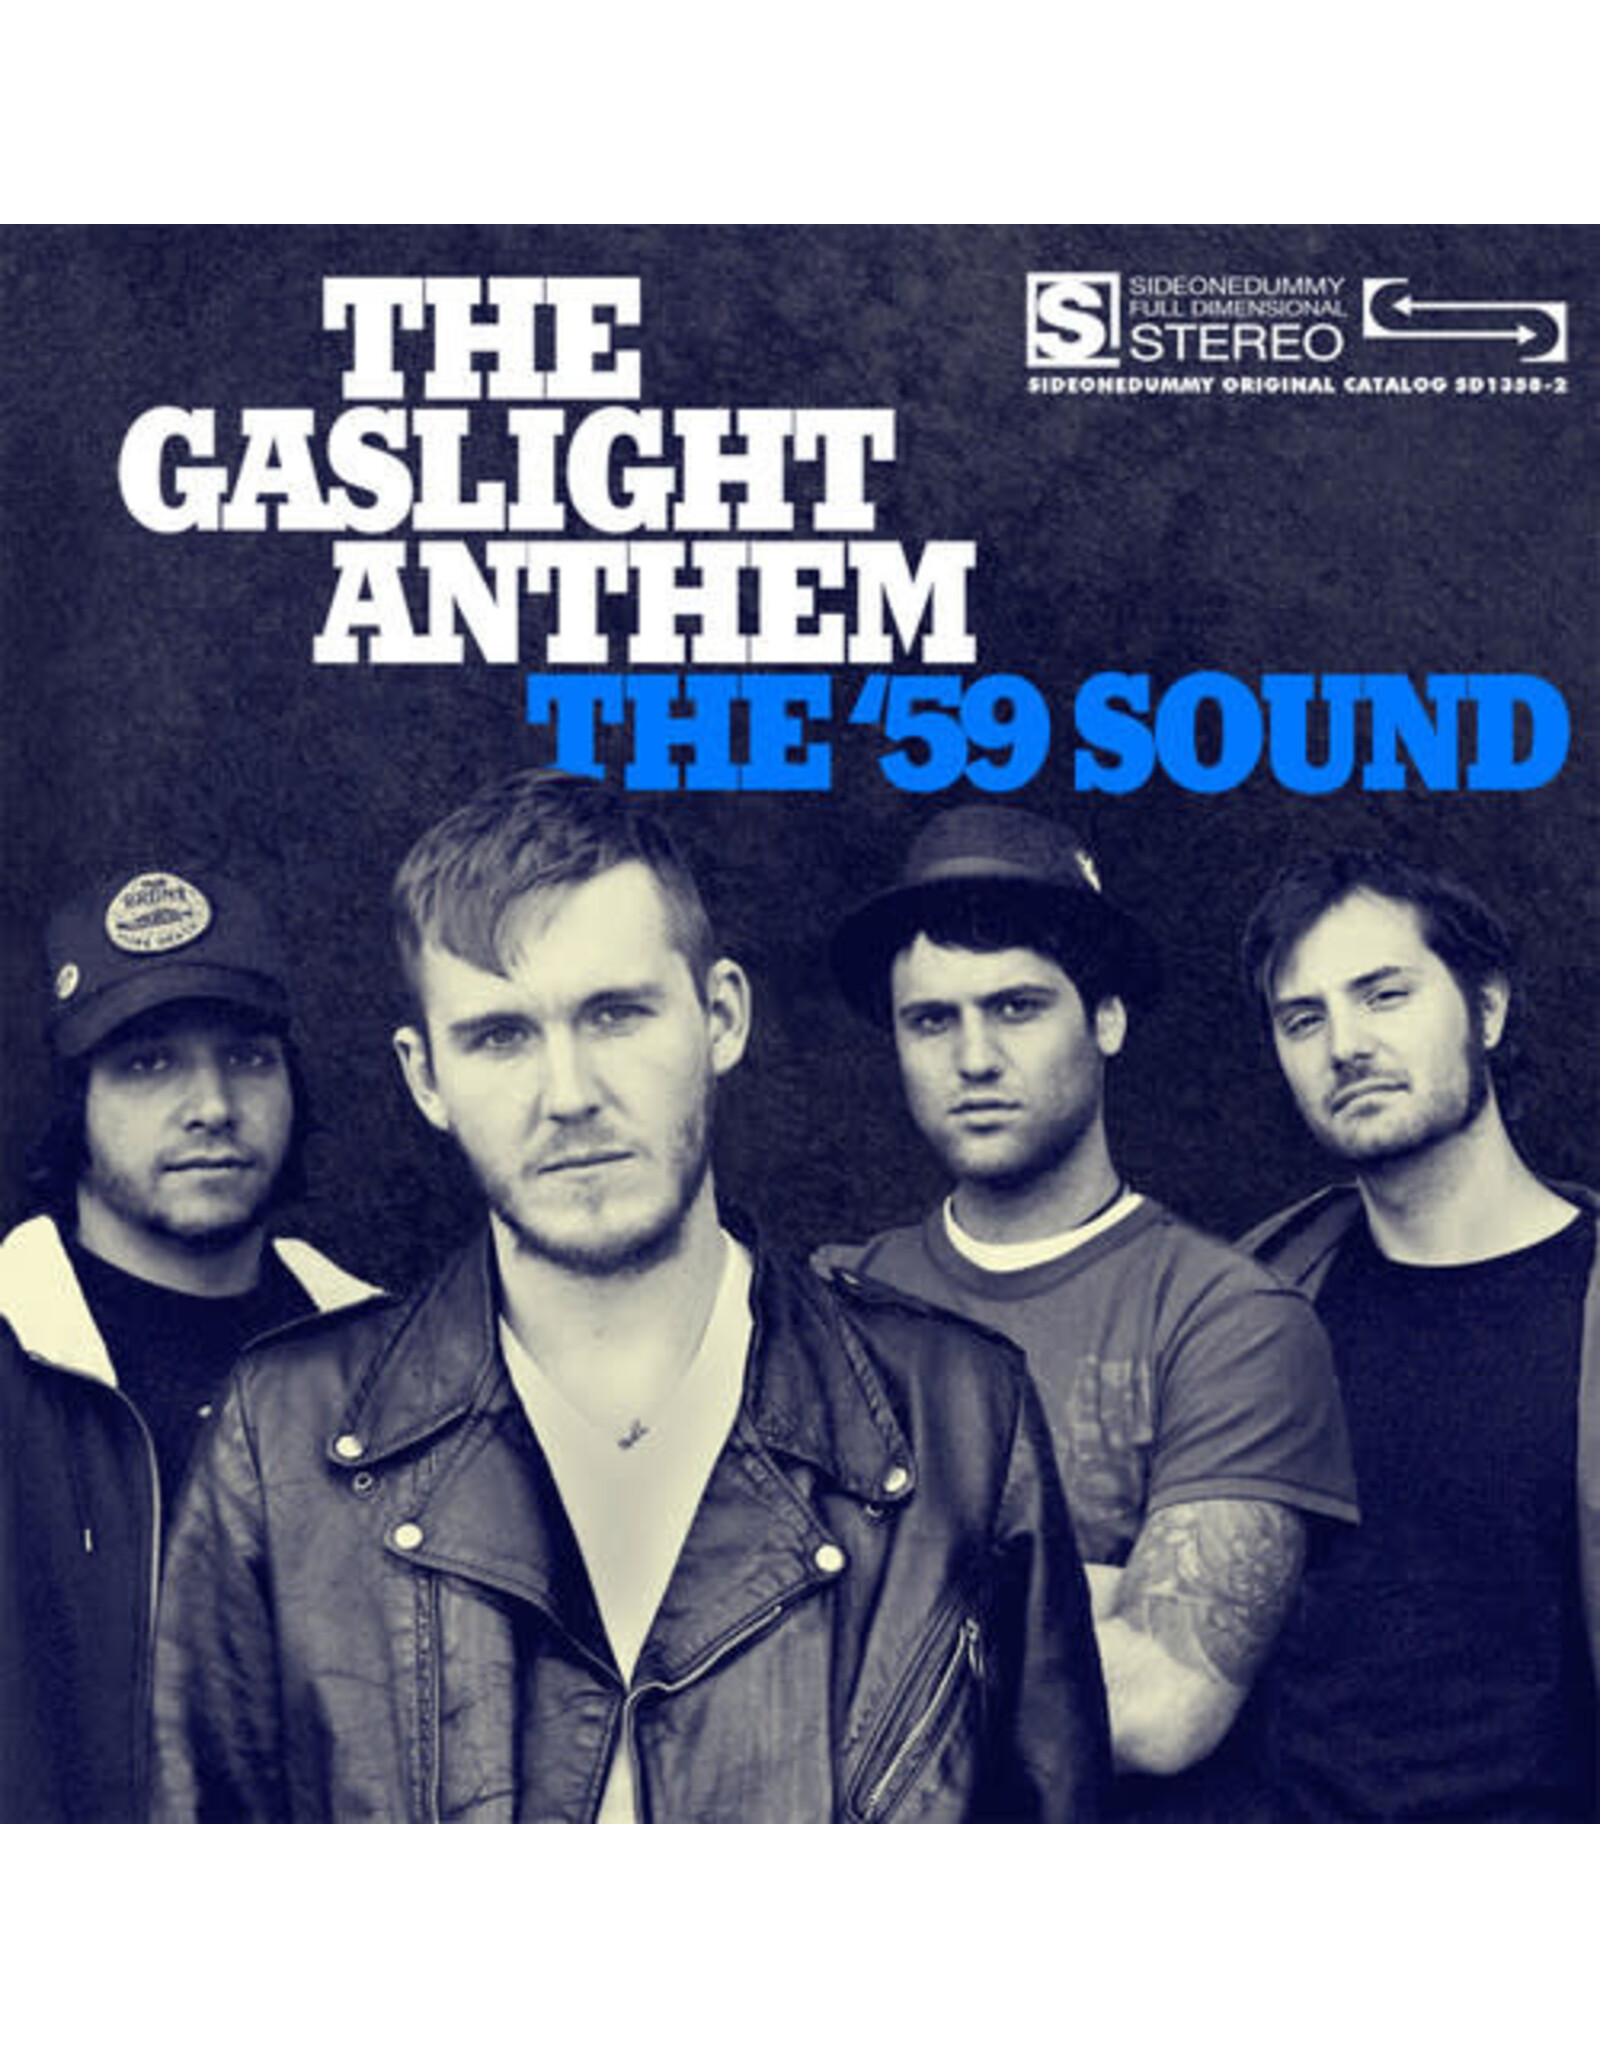 GASLIGHT ANTHEM / 59 SOUND